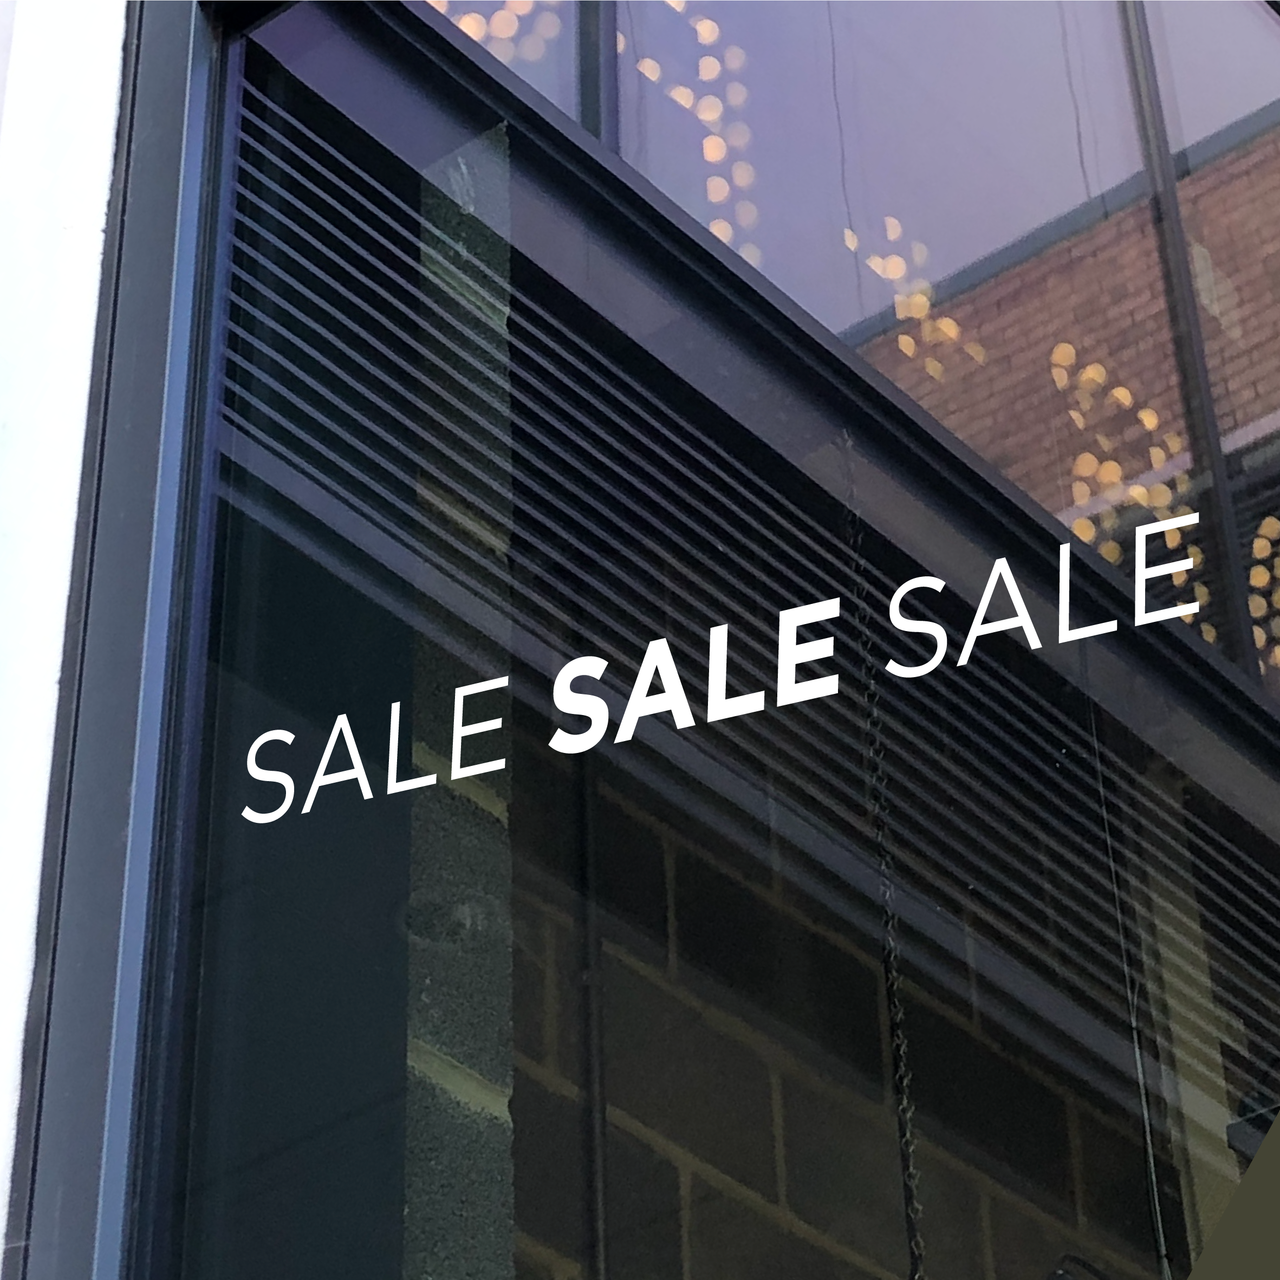 SALE Window - Business Shop Decal